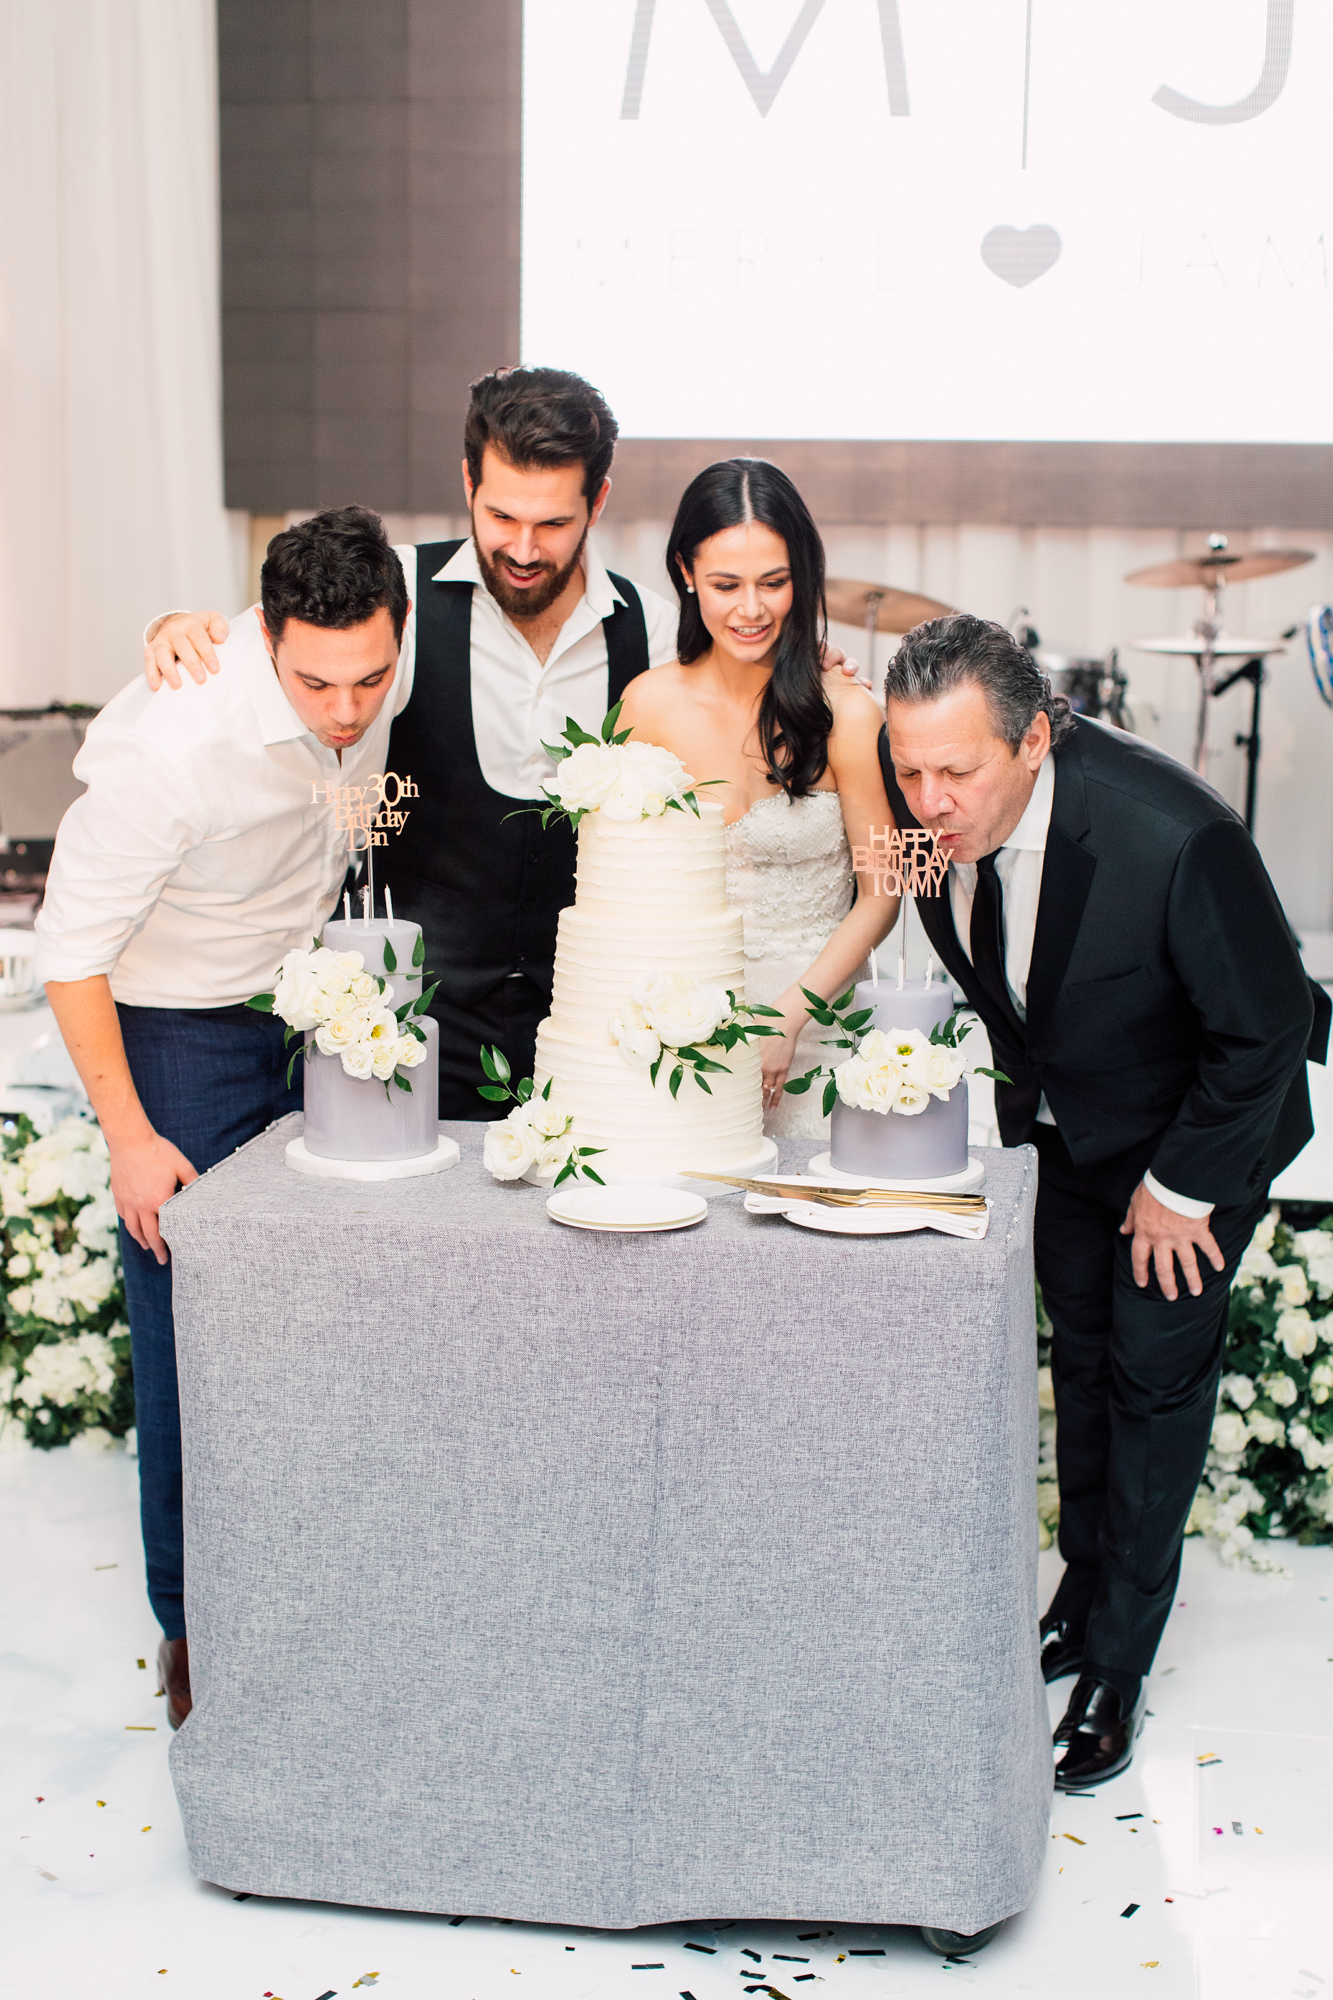 cake cutting wedding